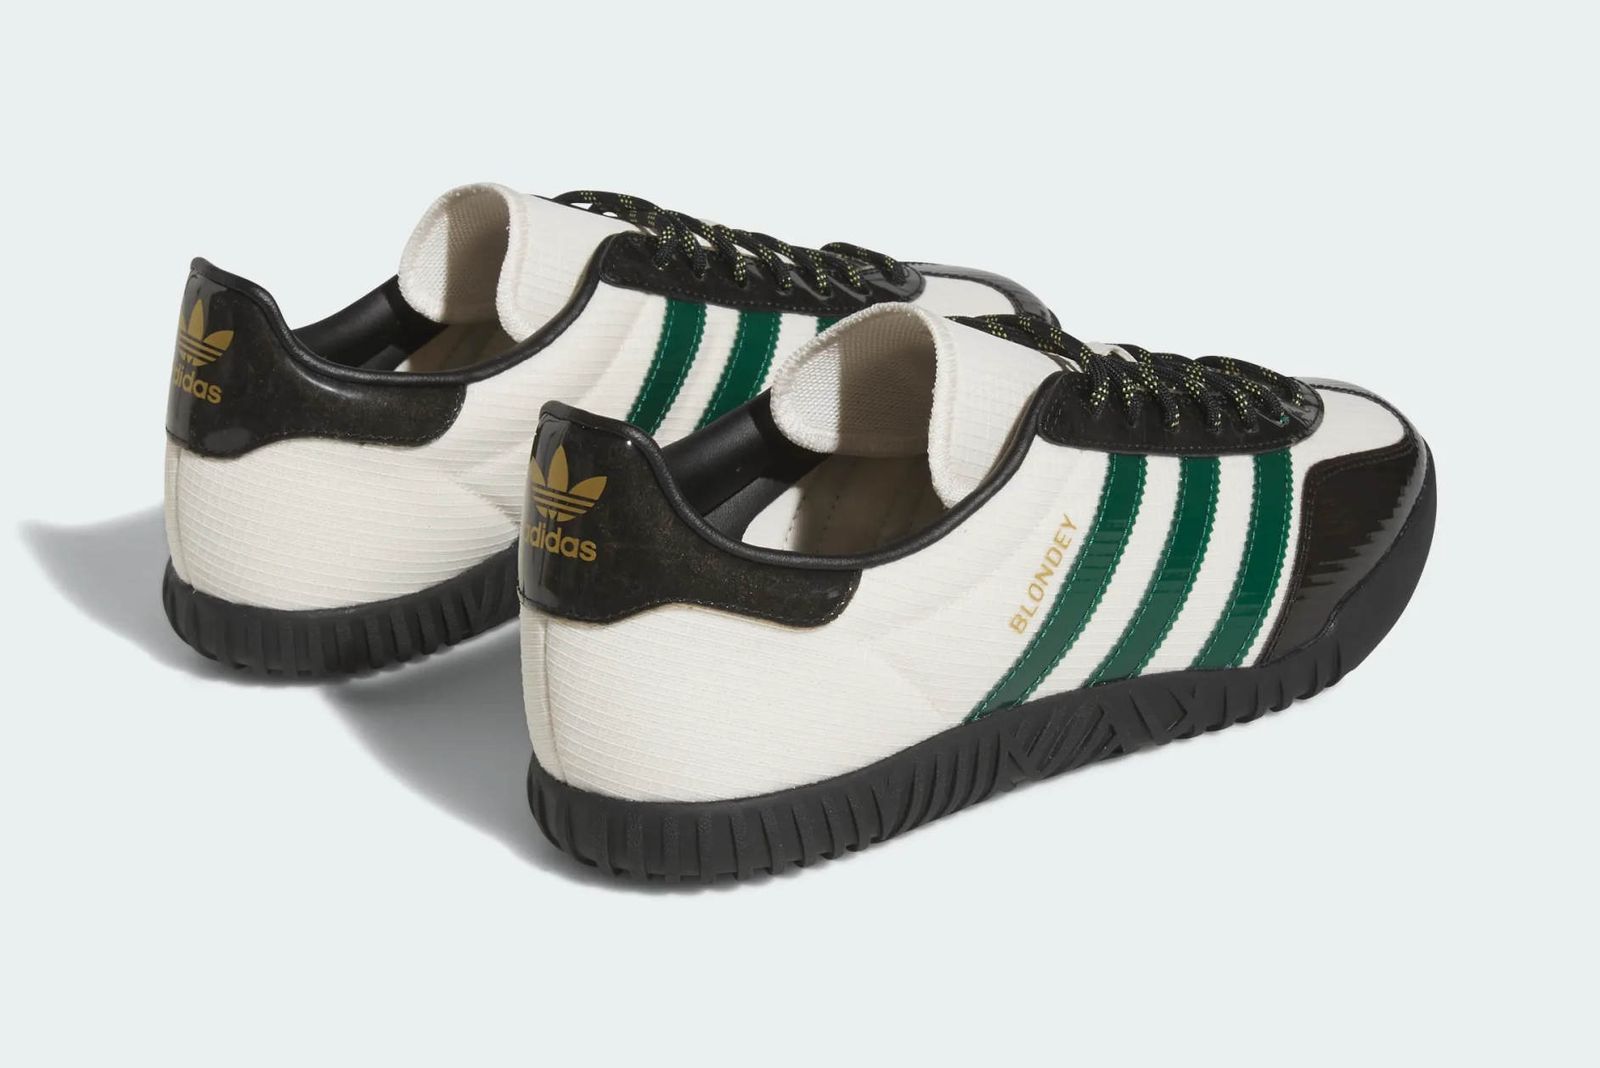 Honestidad minusválido compañero adidas x Thames Gazelle: Shop the Latest adidas x Blondey Sneaker